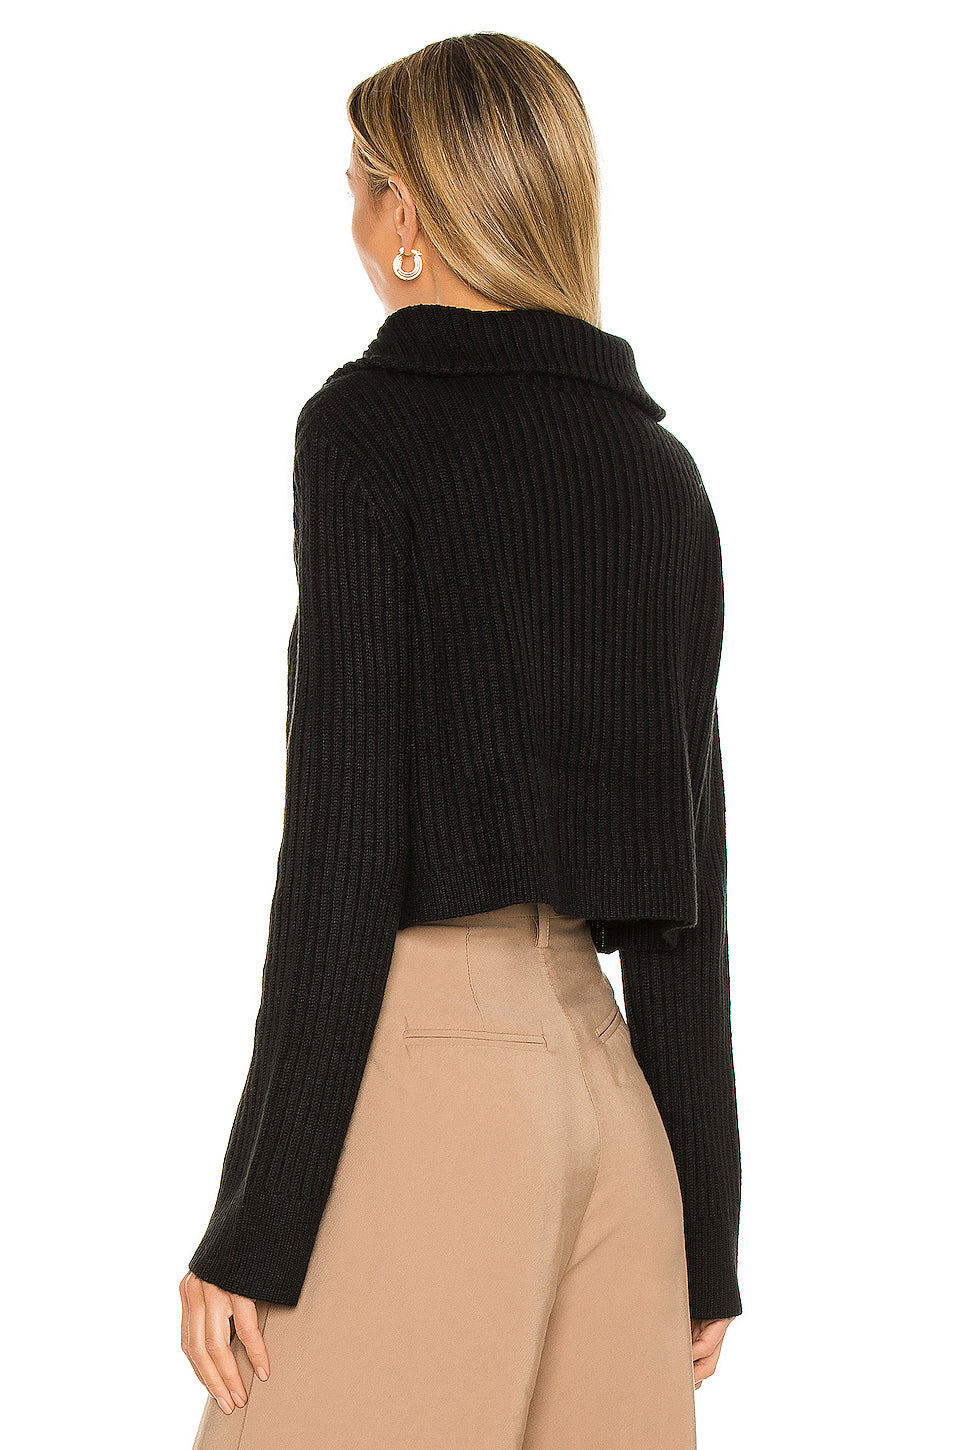 Lovelle Zip Up Sweater in BLACK